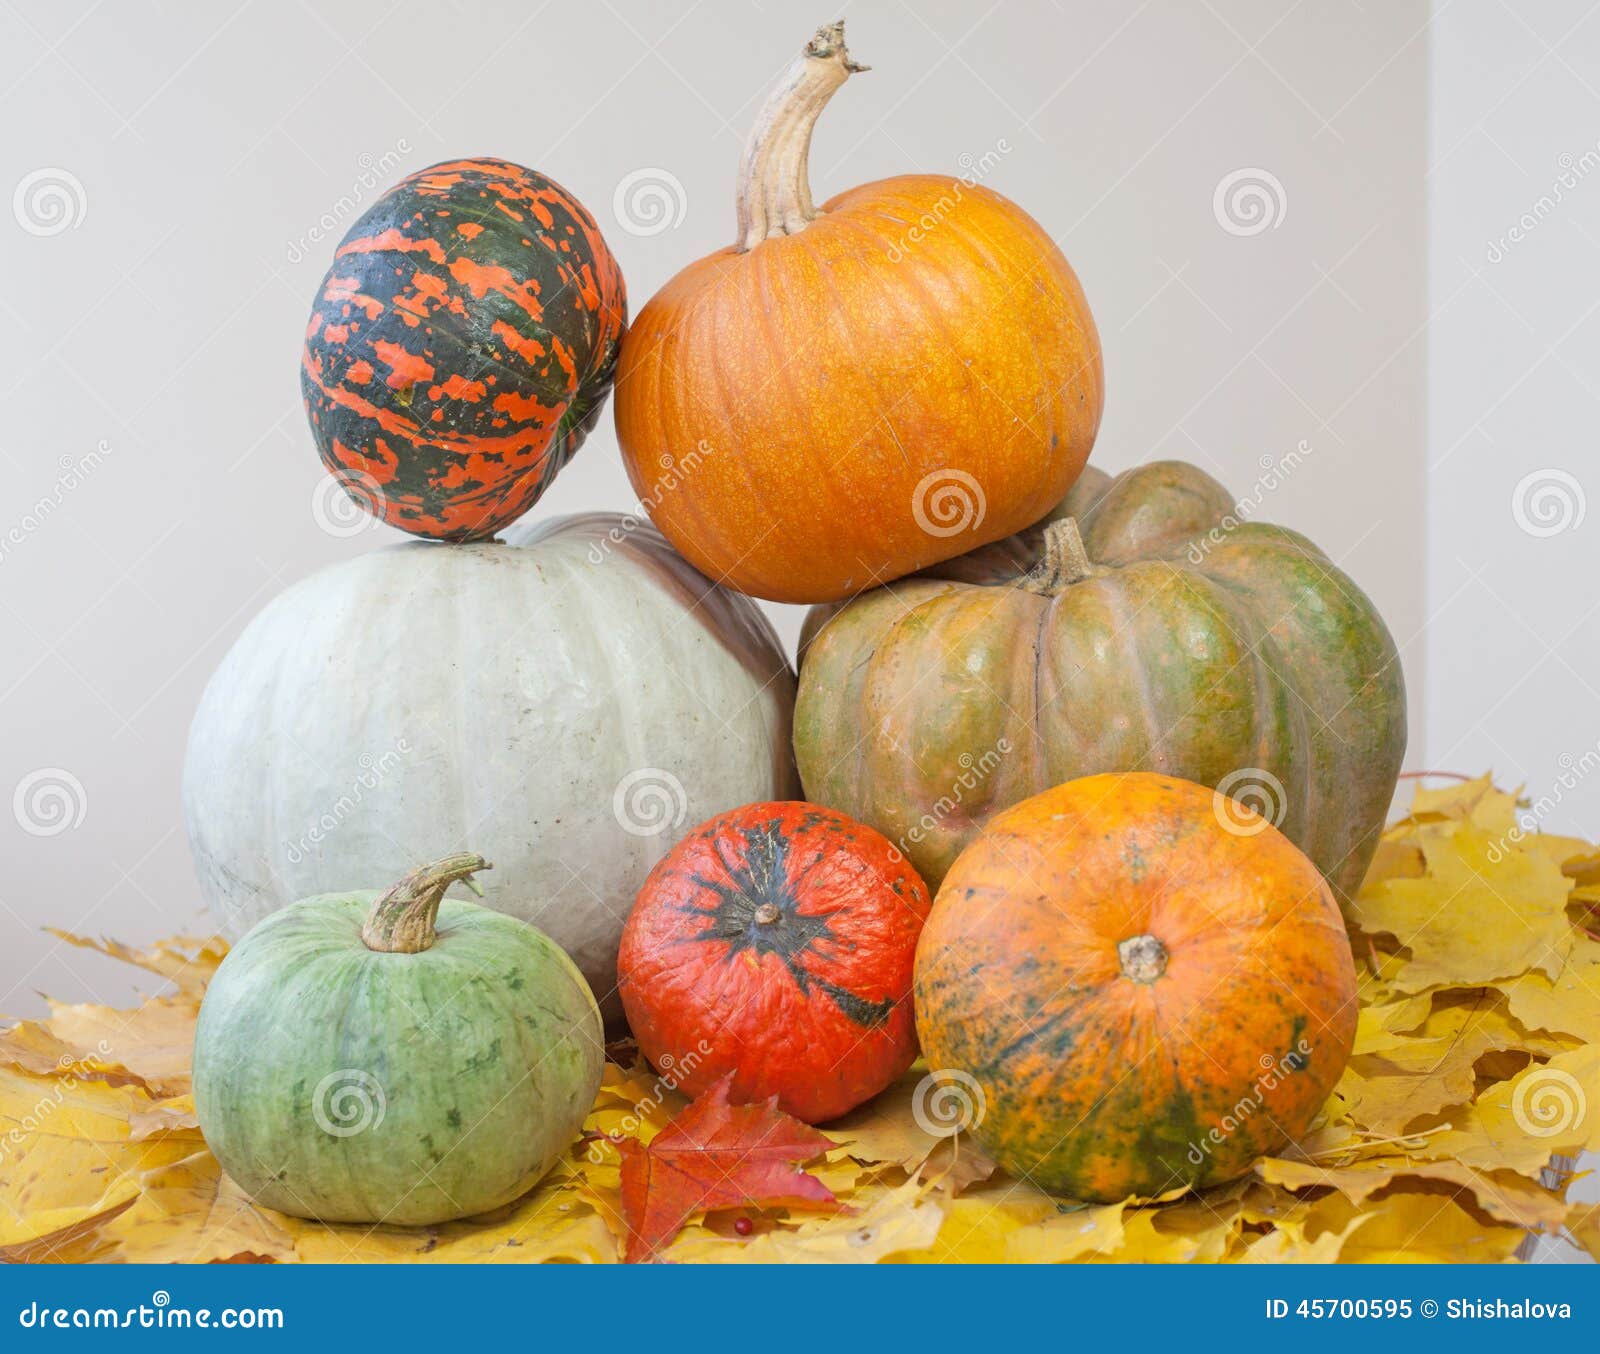 An autumn composition with pumpkins